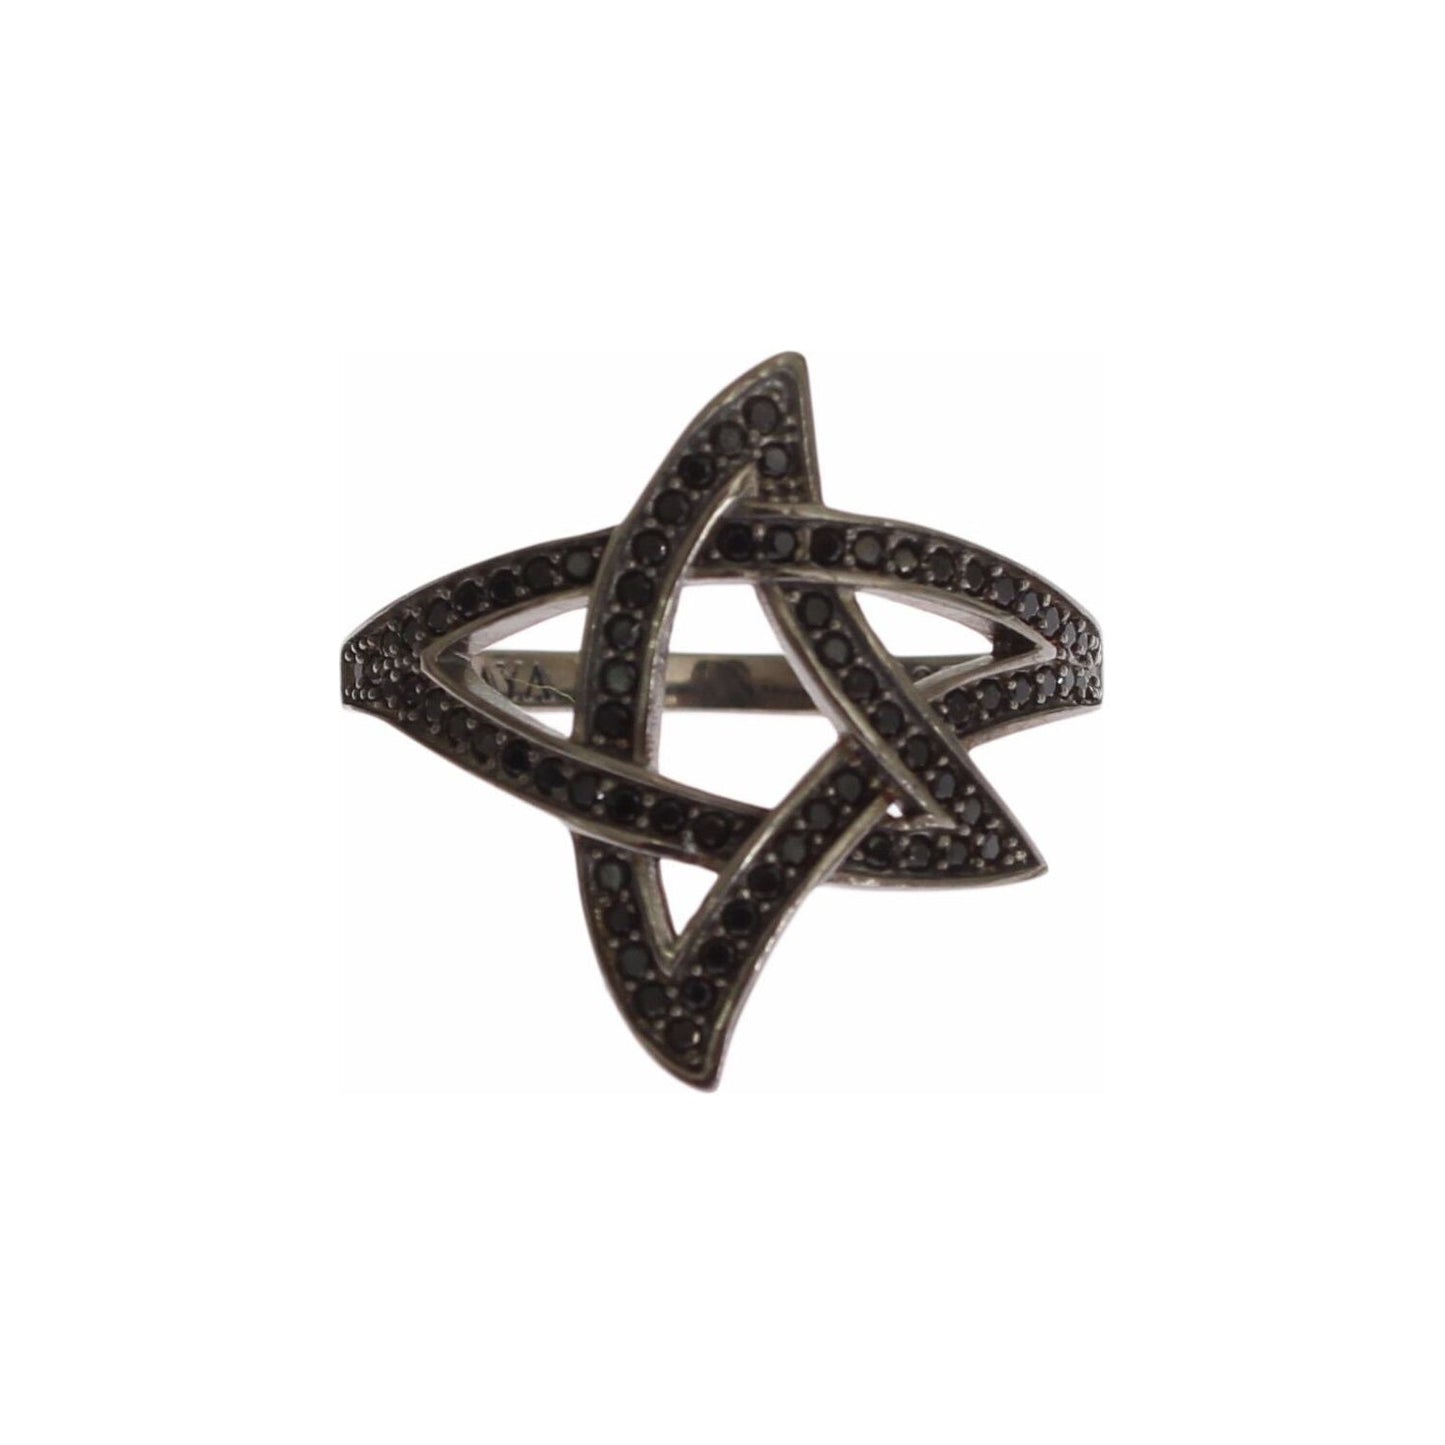 Nialaya Chic Black Rhodium Silver CZ Crystal Ring Ring black-cz-rhodium-925-silver-womens-ring